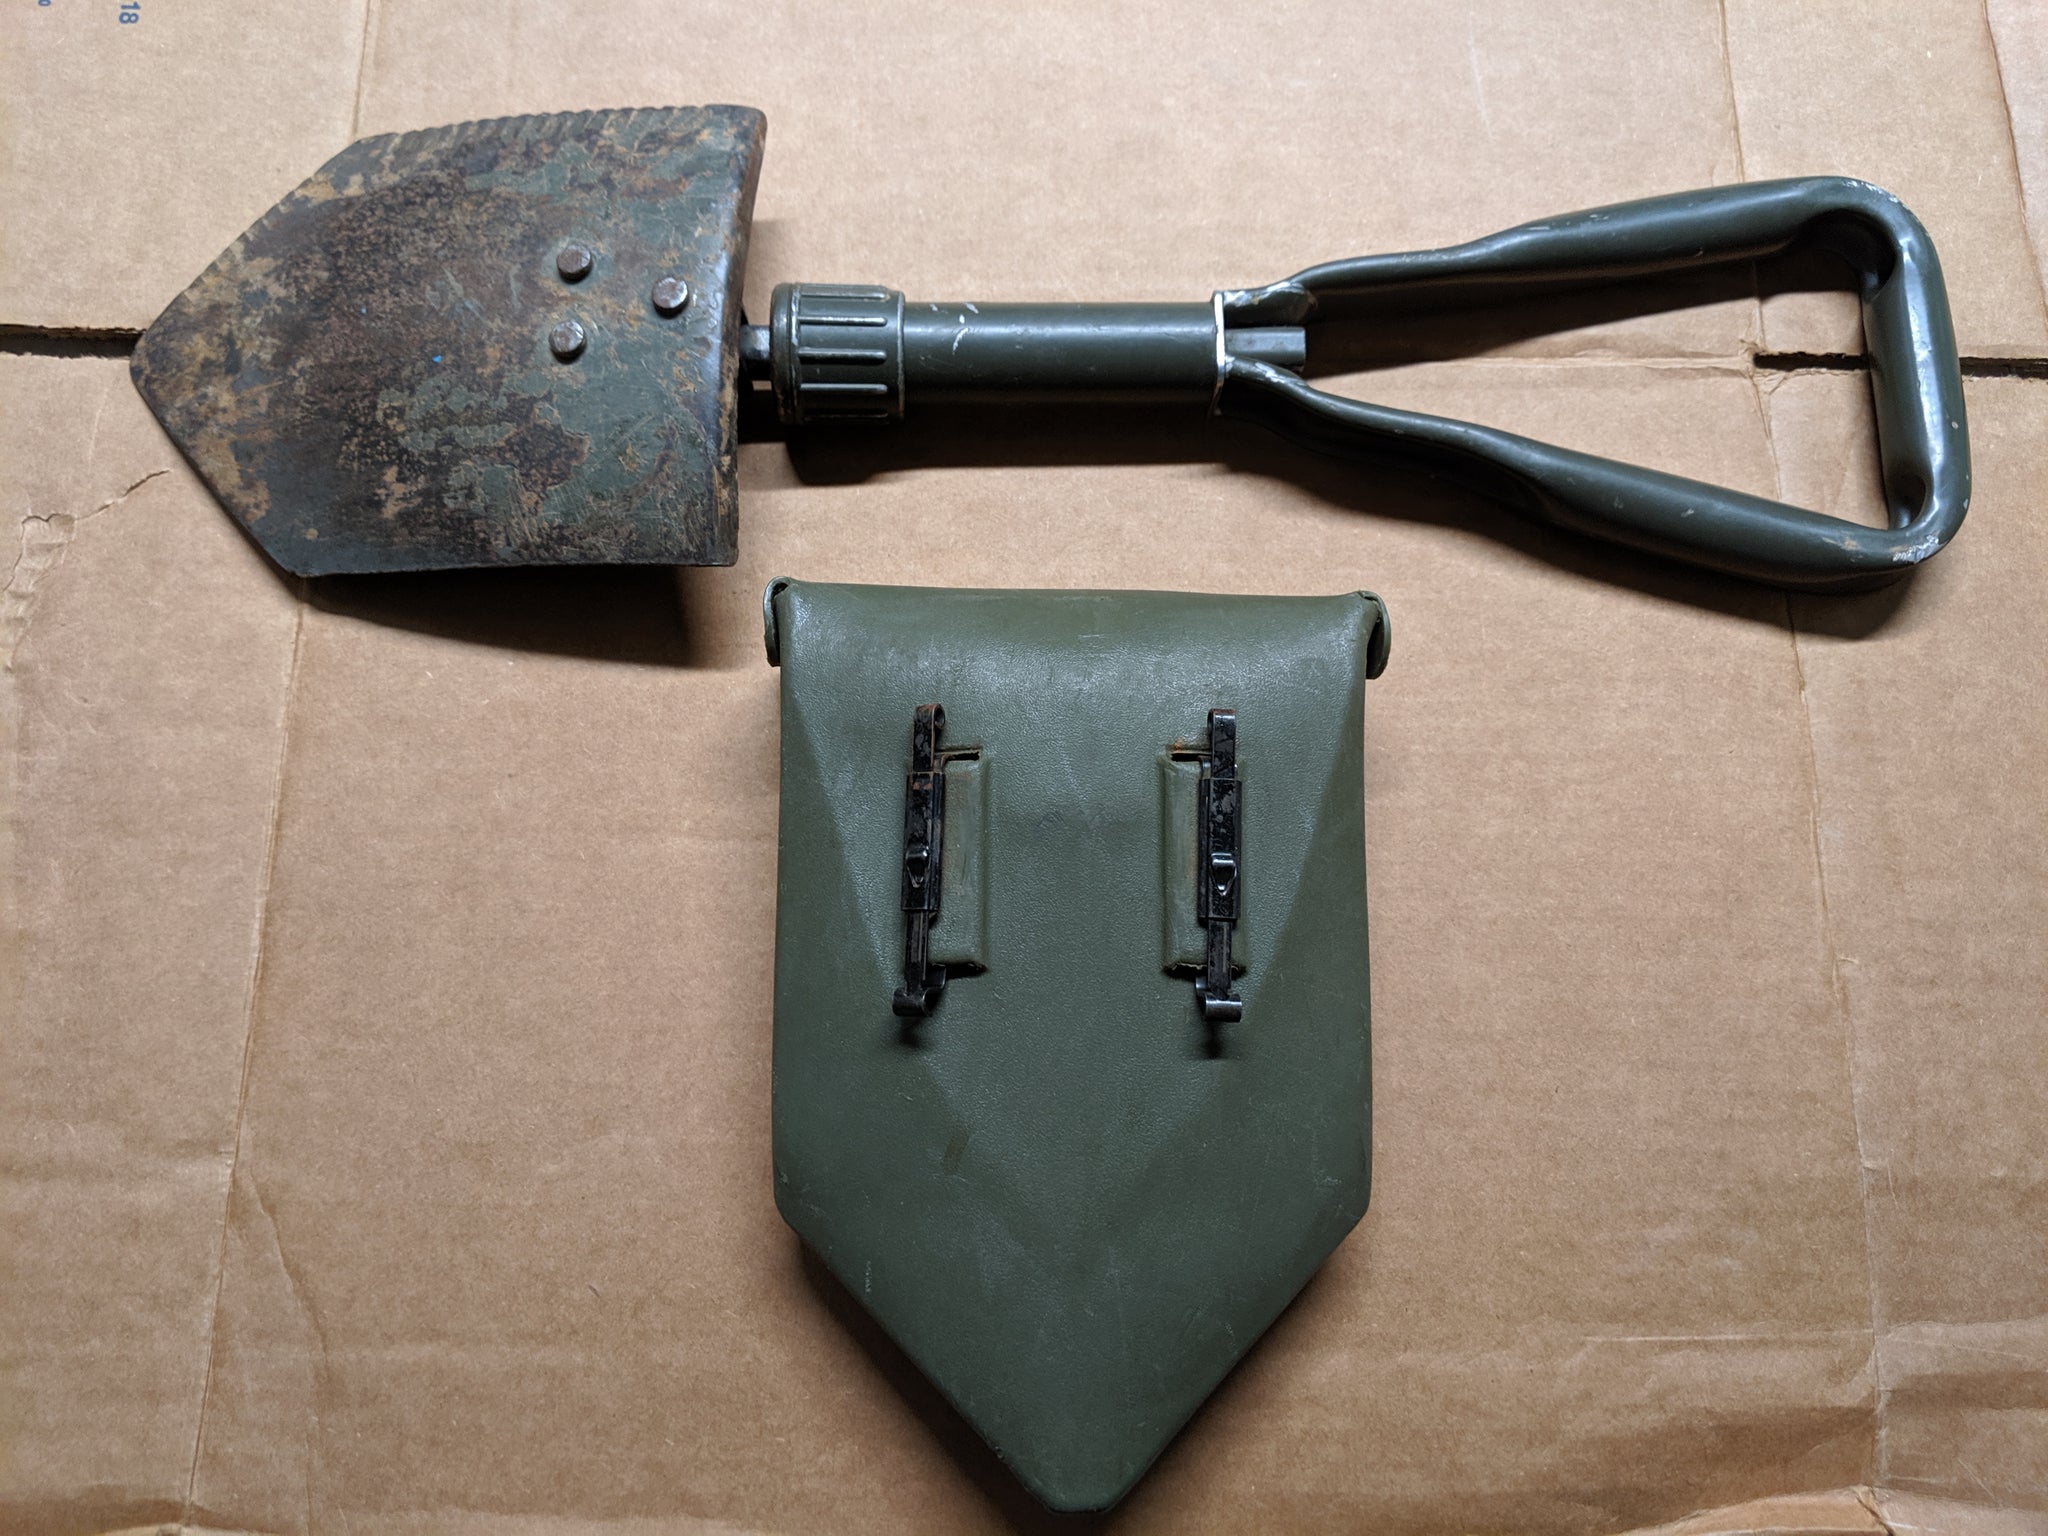 Used Genuine German BUND Military Issue Shovel